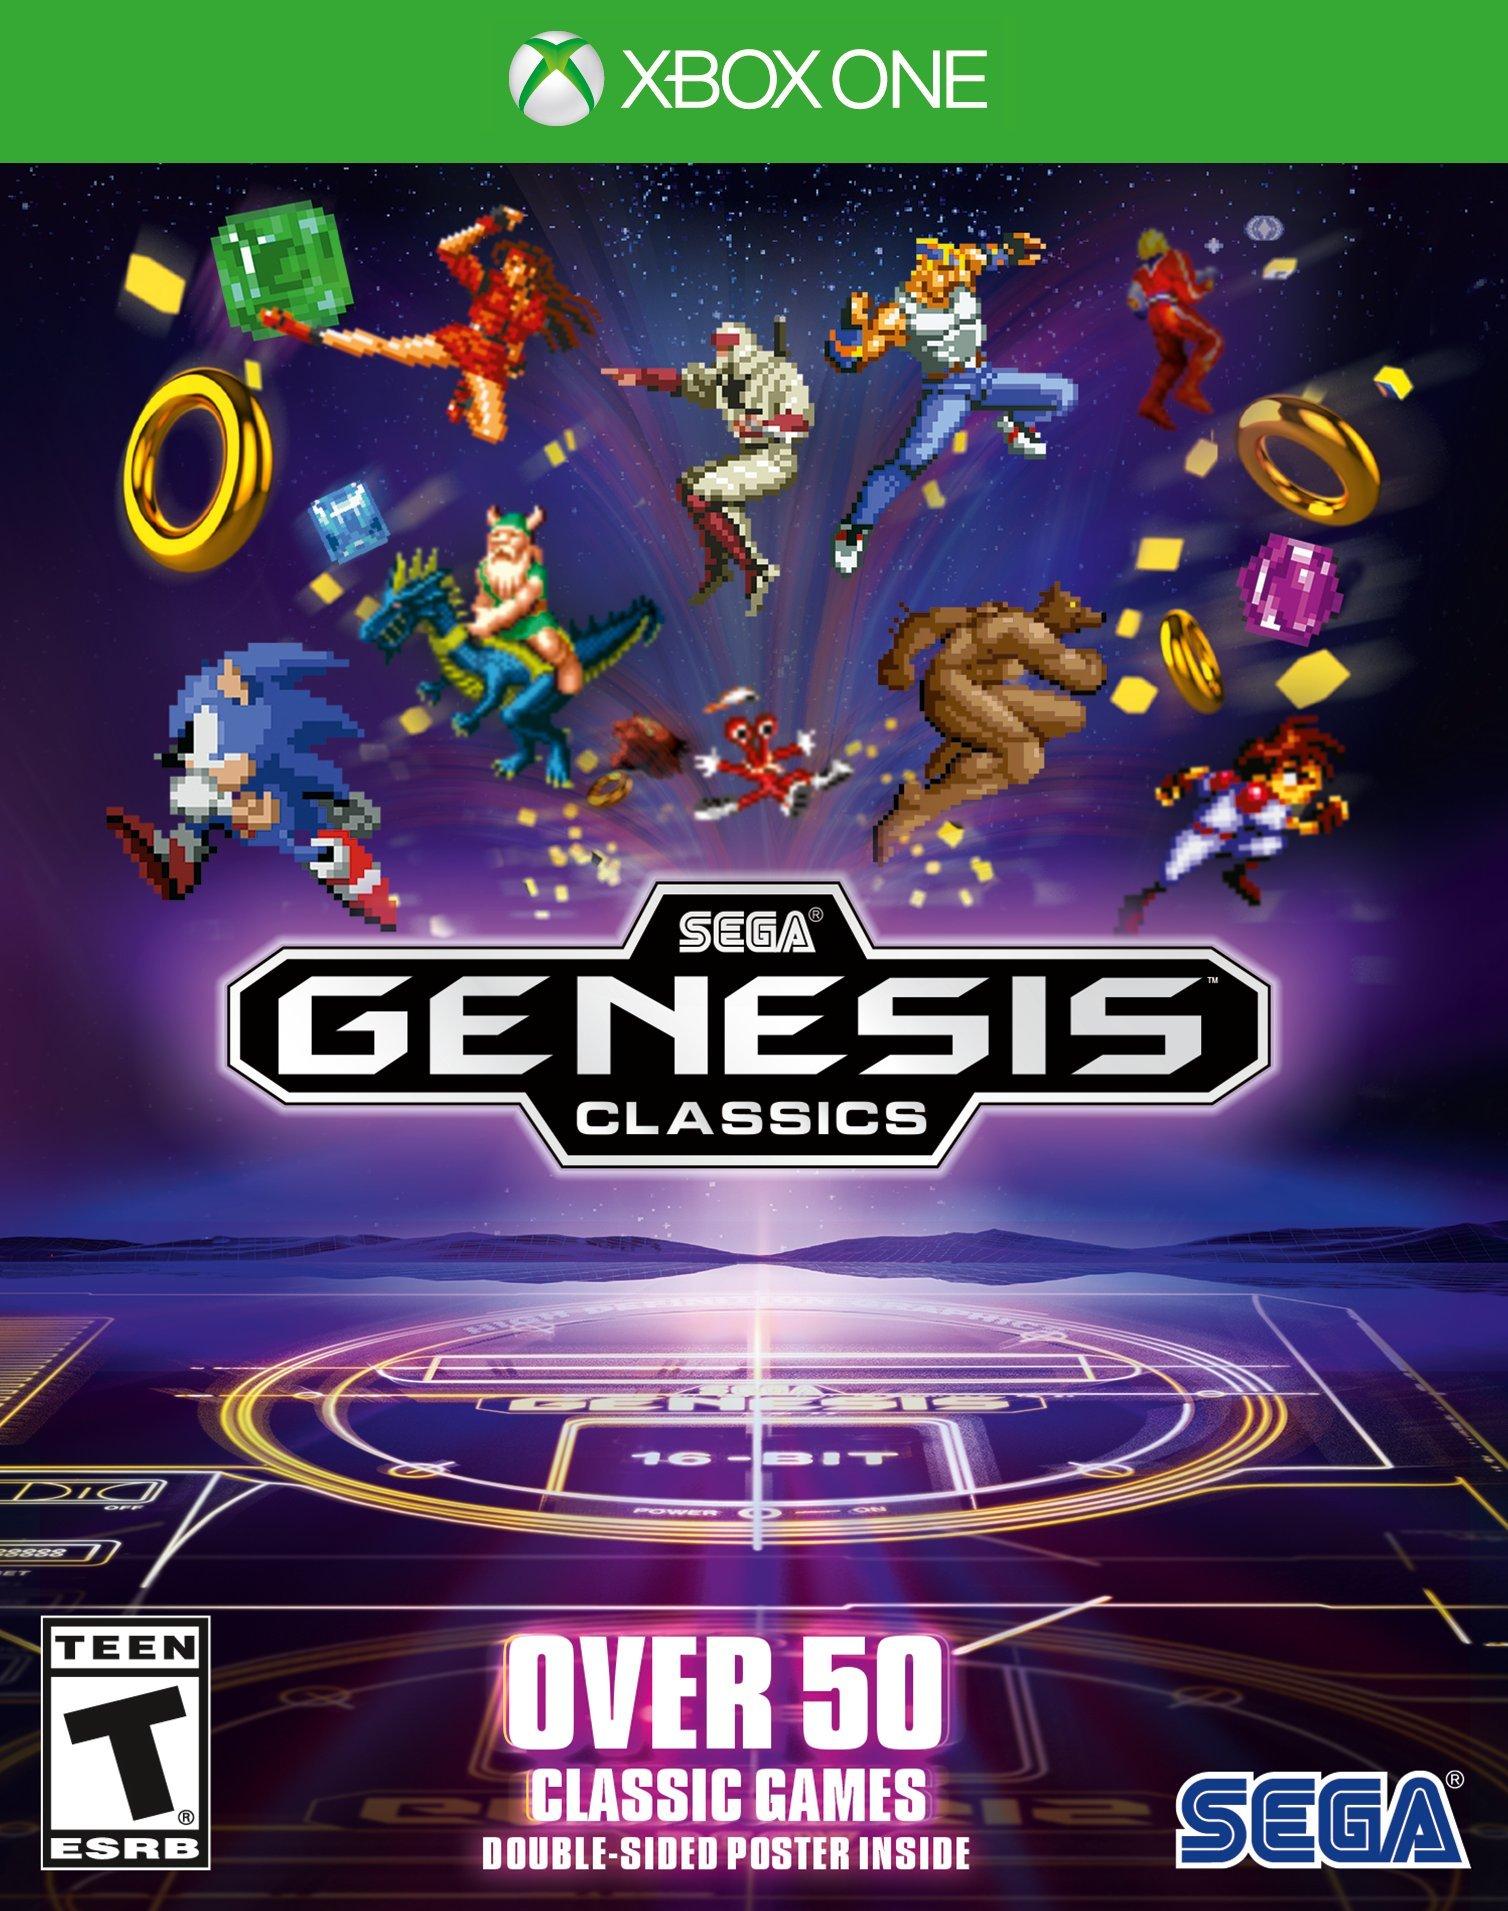 SEGA Genesis Classics - Xbox One | One | GameStop